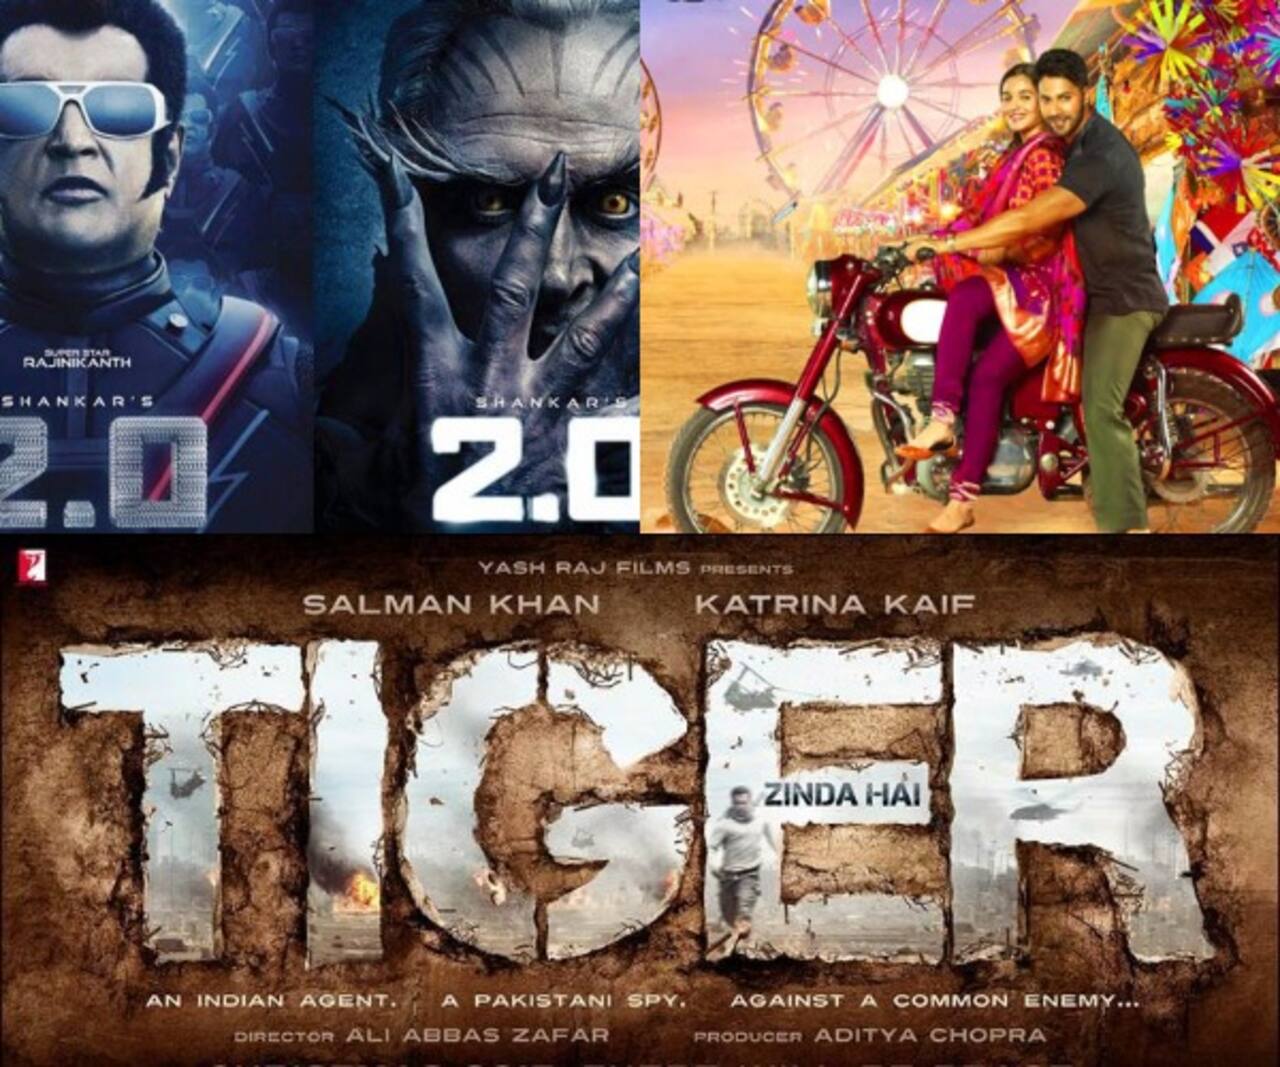 Akshay Kumar's Jolly LLB 2, Rajinikanth's 2.0, Salman Khan's Tiger Zinda Hai - 10 hotly anticipated sequels of 2017